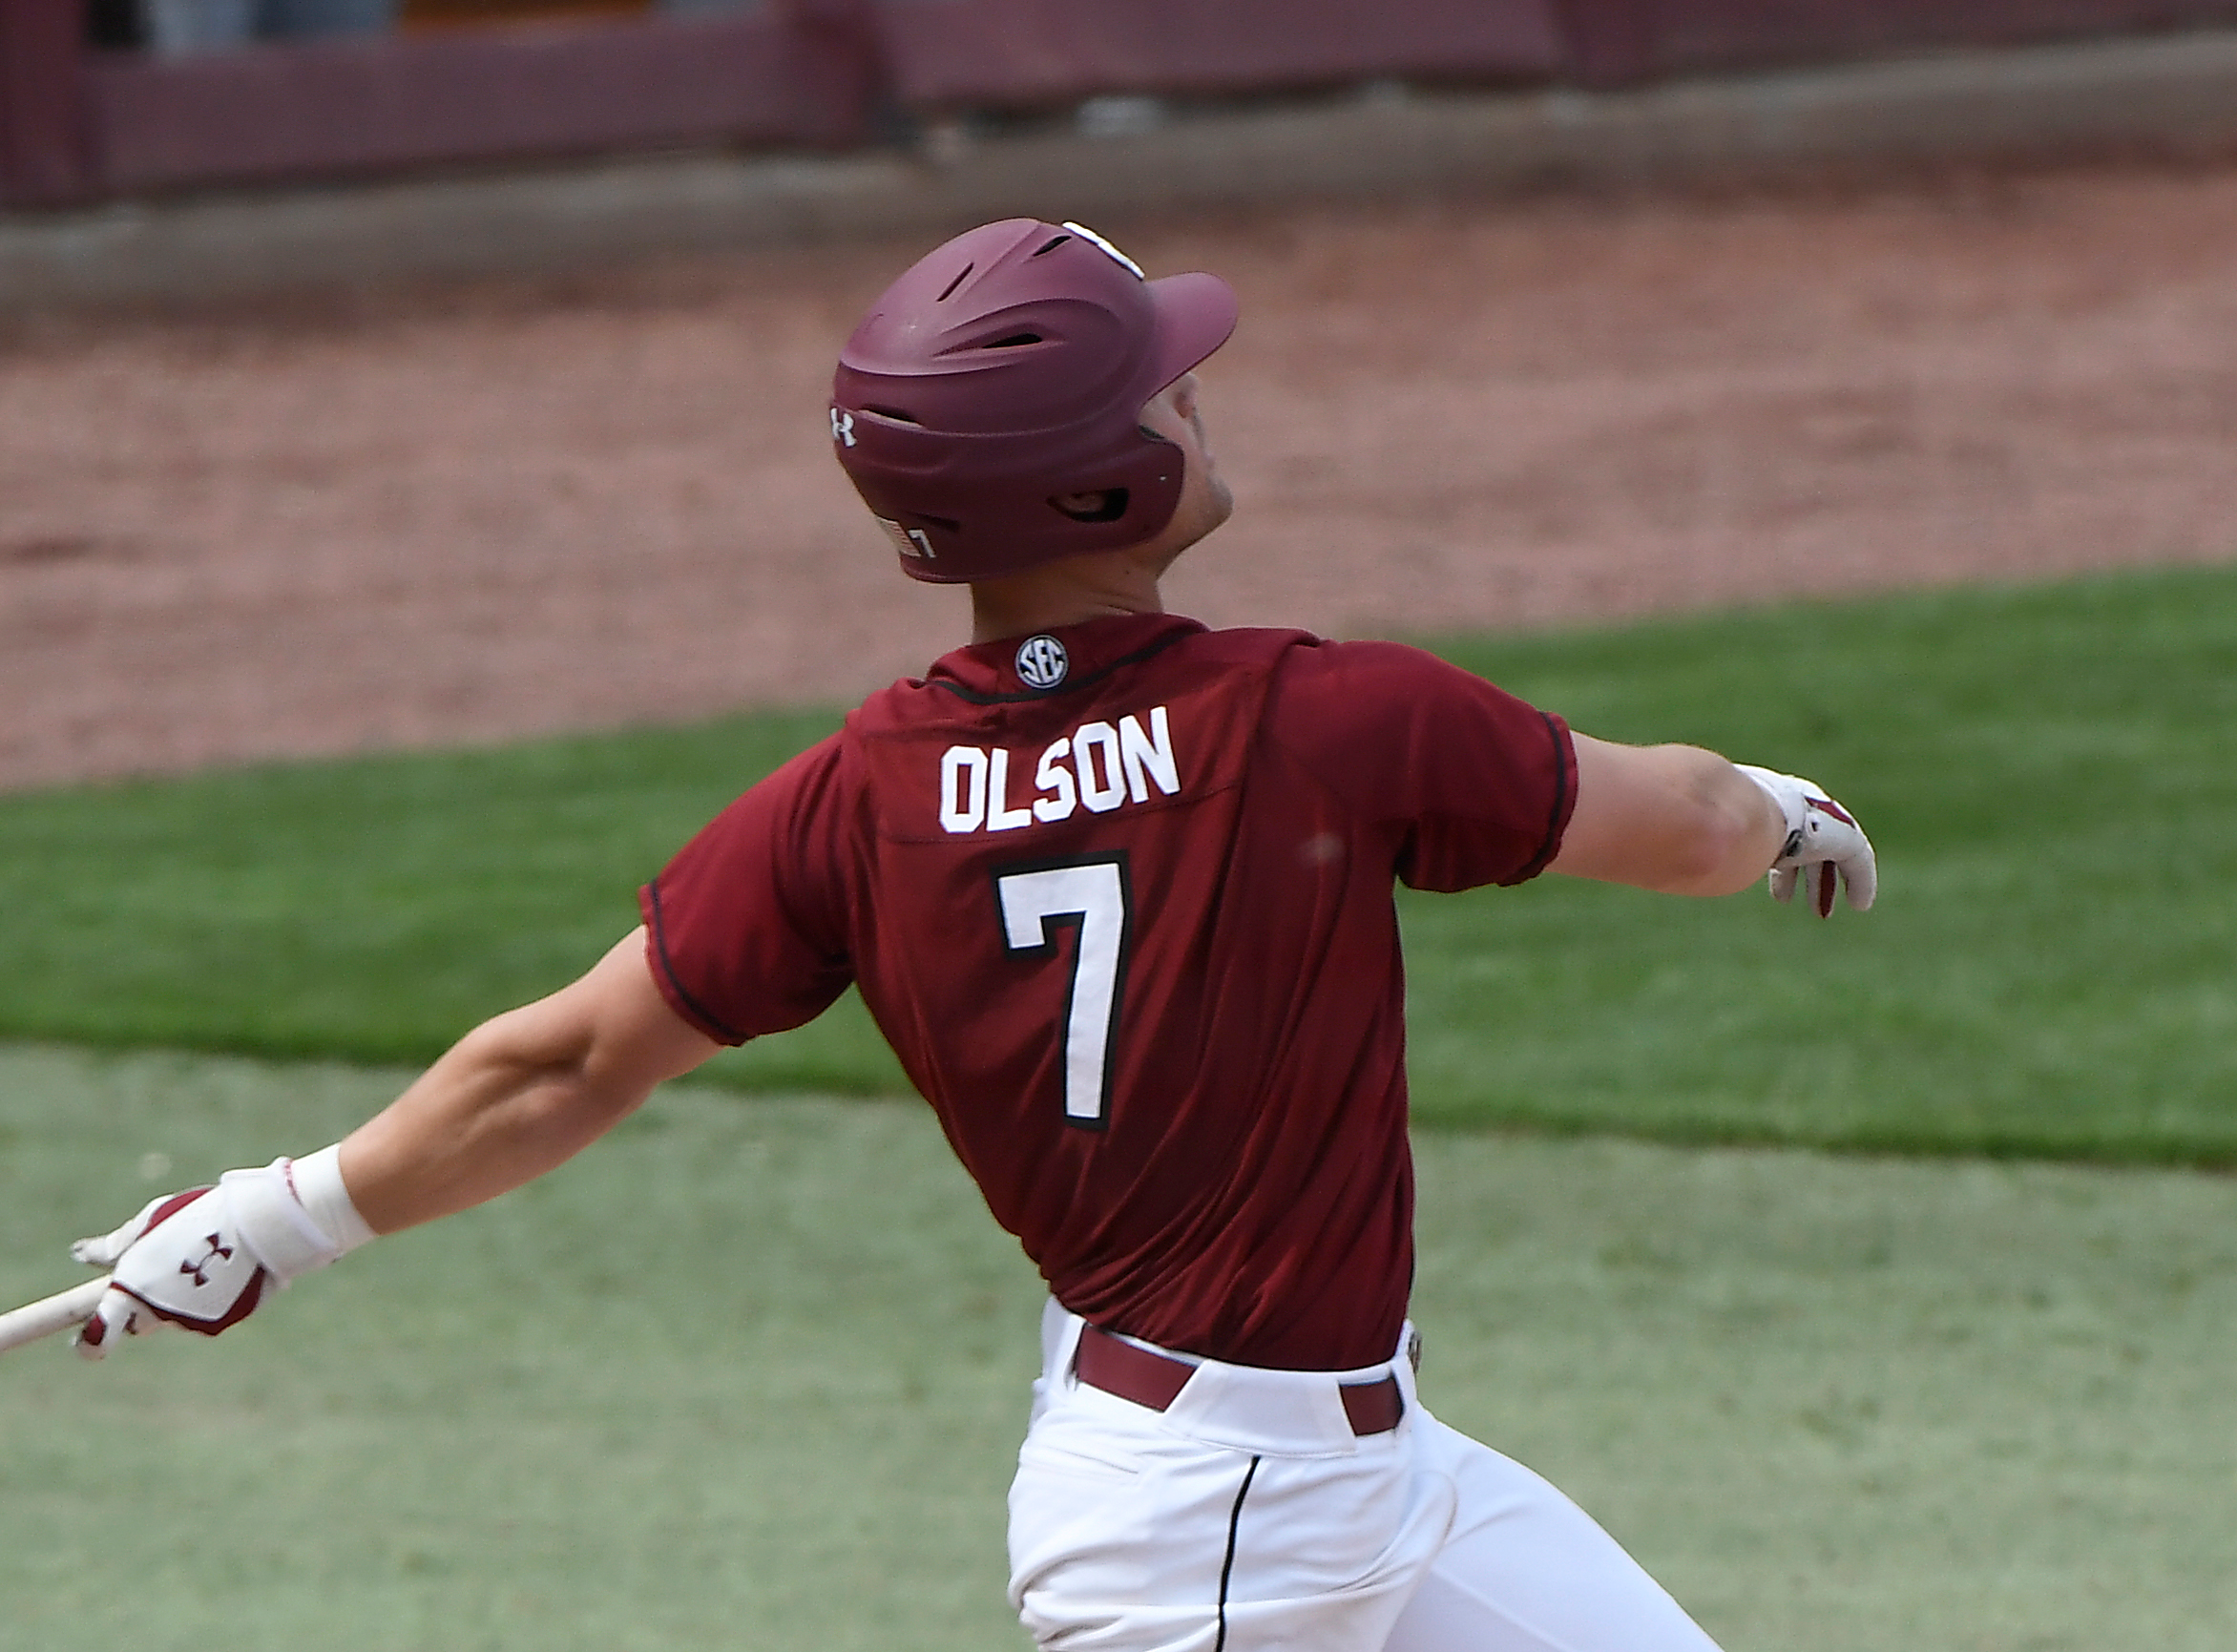 Baseball's Olson Named a National Player of the Week by Collegiate Baseball